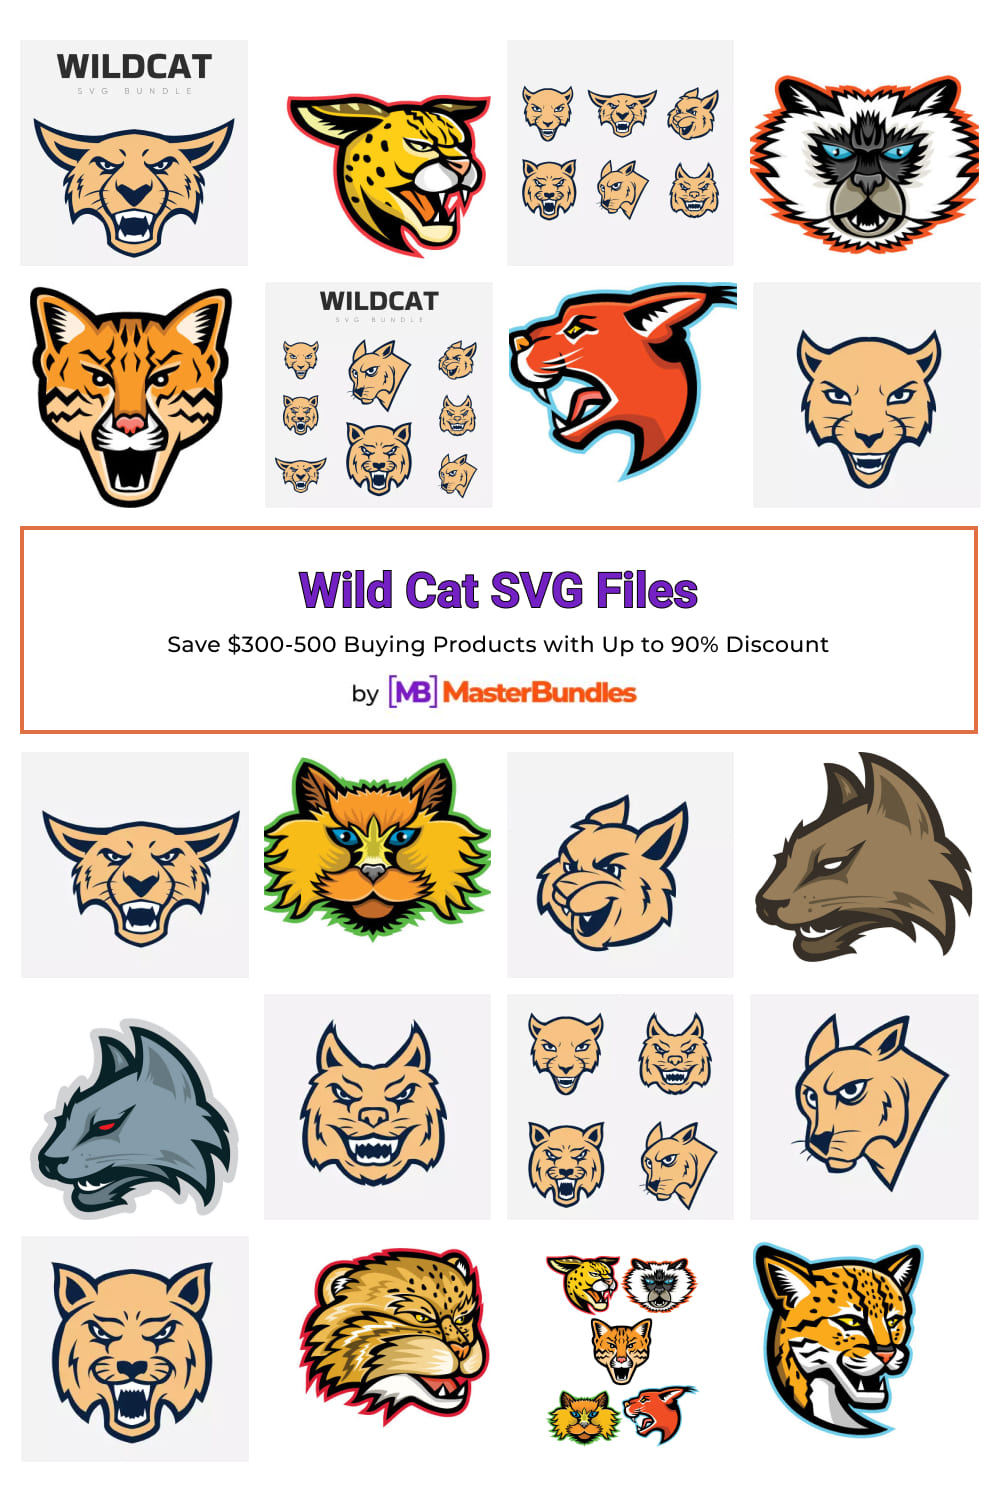 Wild Cat SVG Files for pinterest.